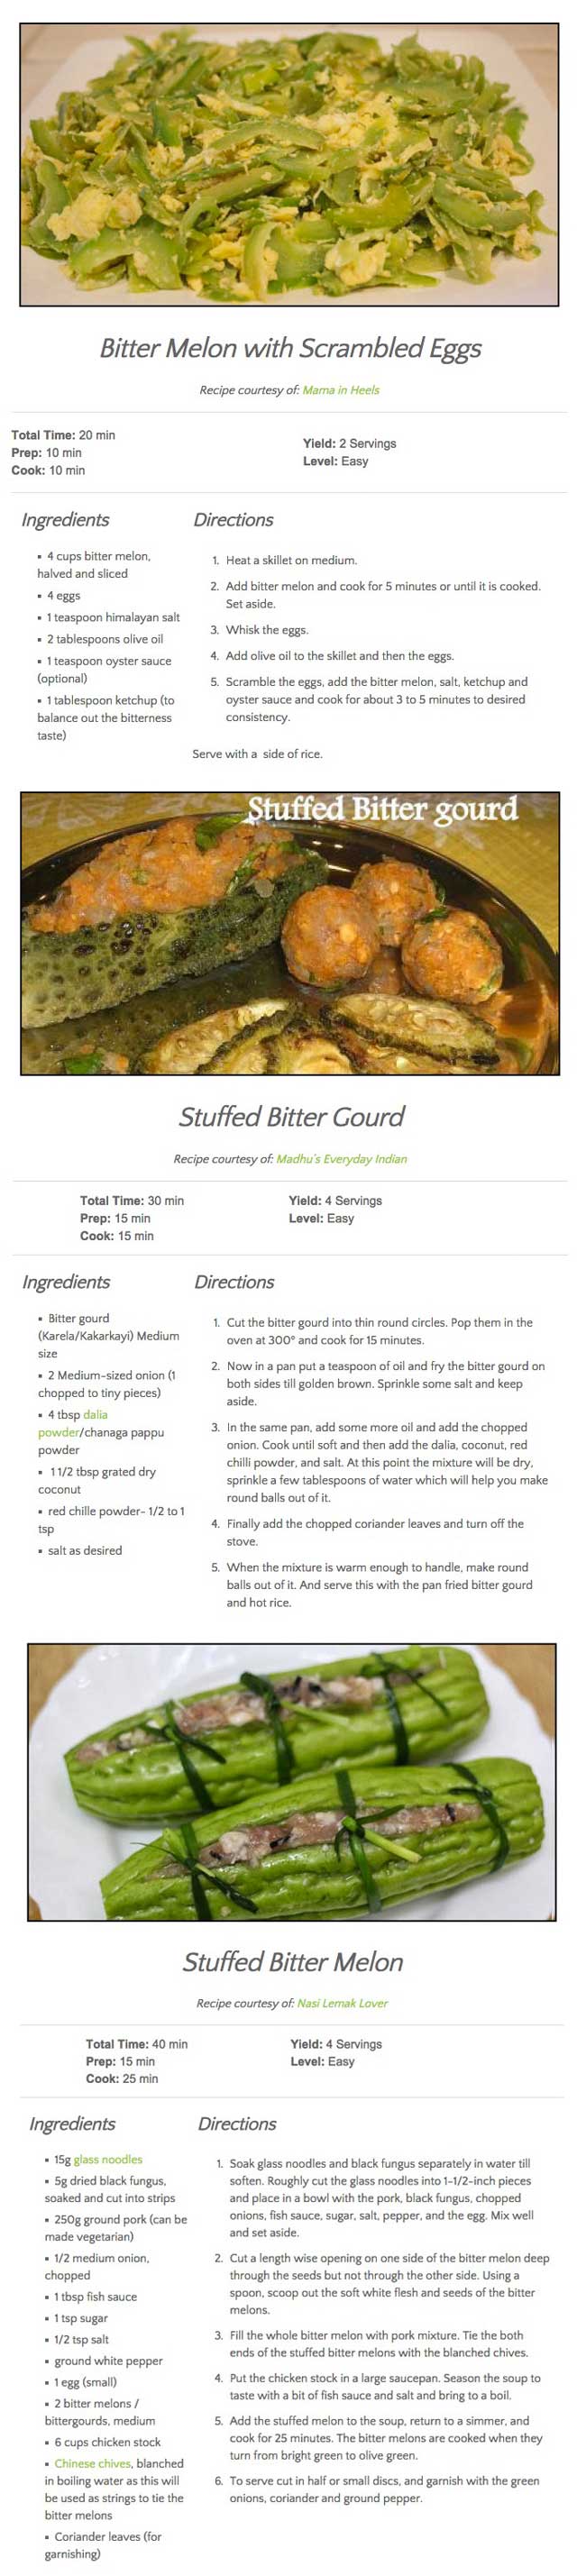 Bitter Melon Recipes, One Community